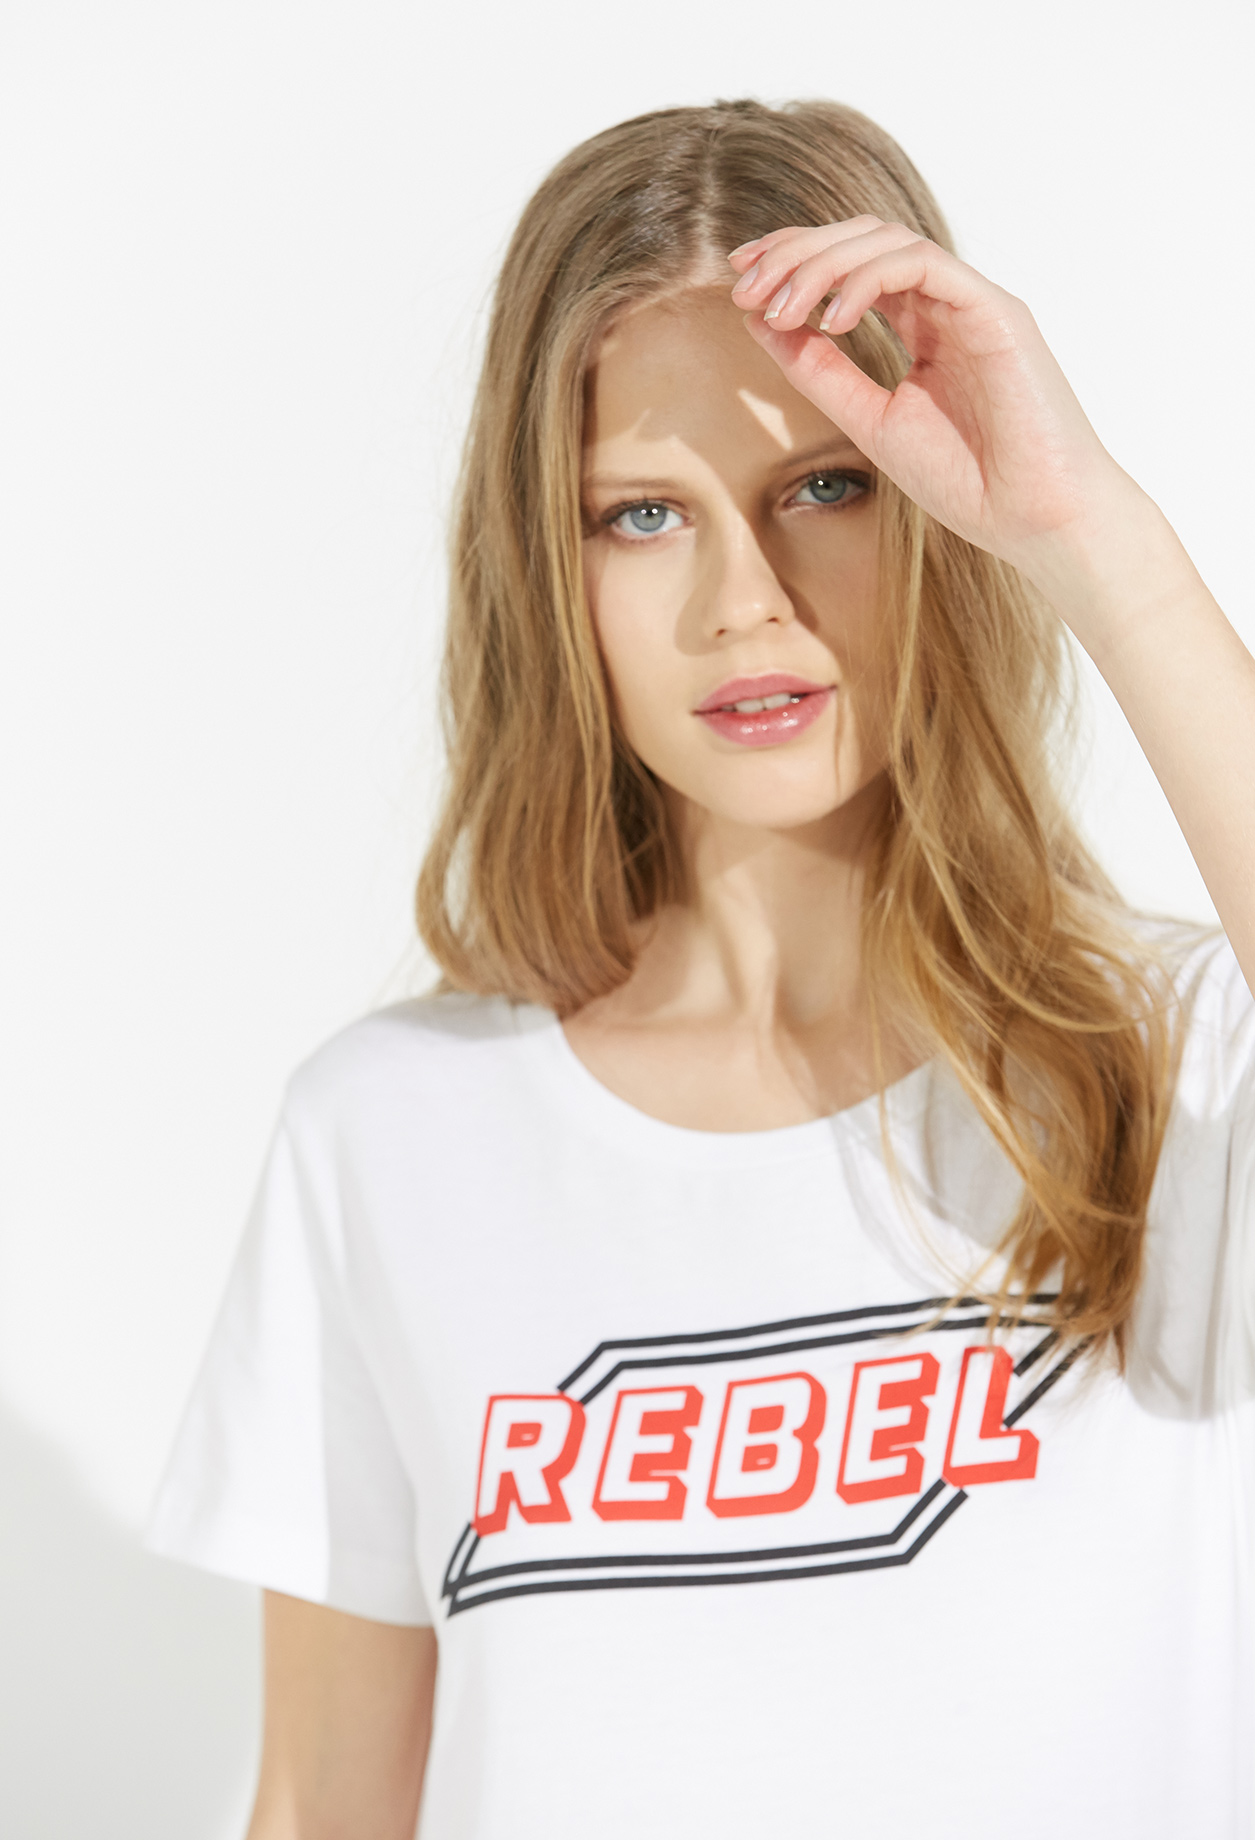 04-t-shirt-a-message-fun-folkr-rebel-claudie-pierlot